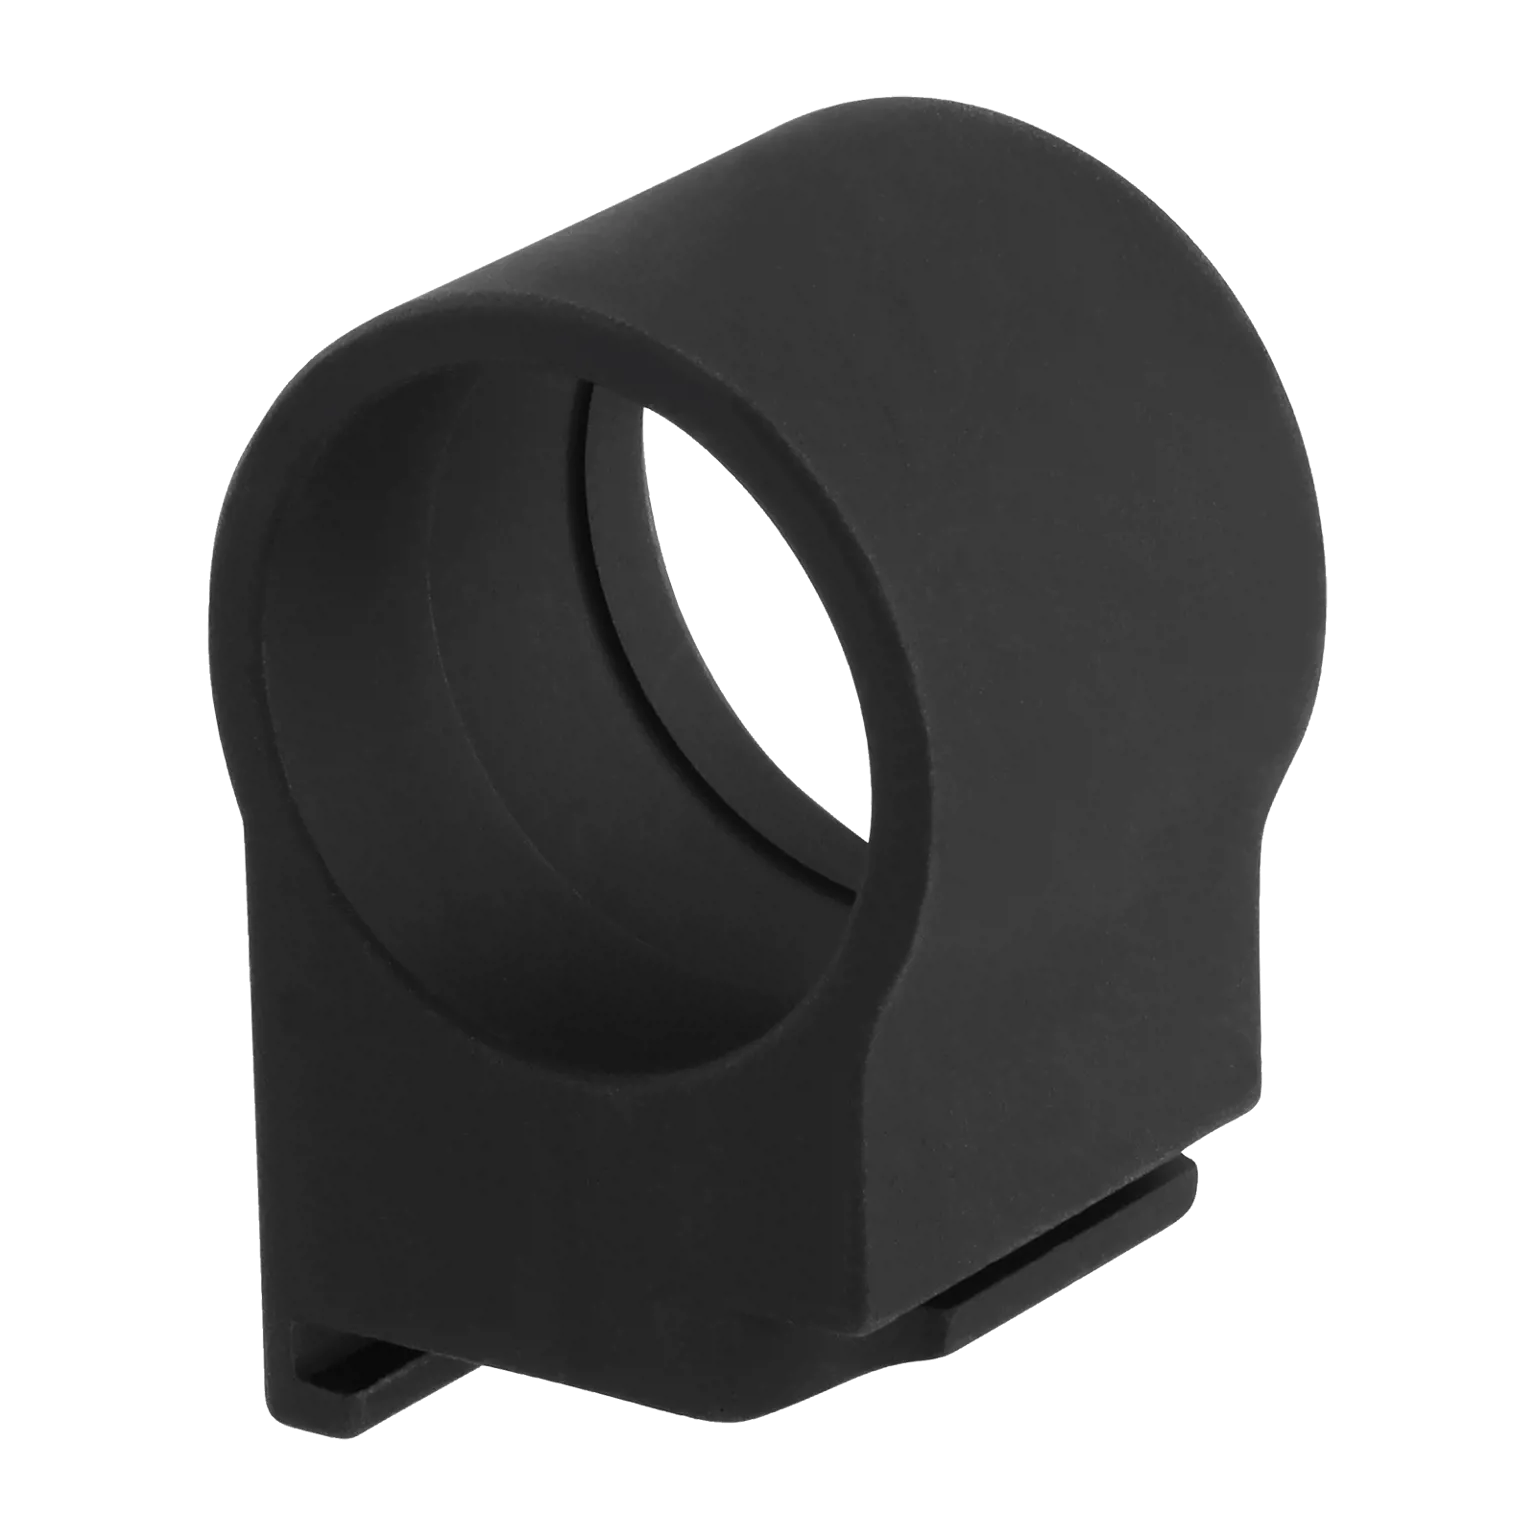 Anilla CEU™ - Alto 39 mm Solo anilla - Requiere la base TwistMount™  - 1